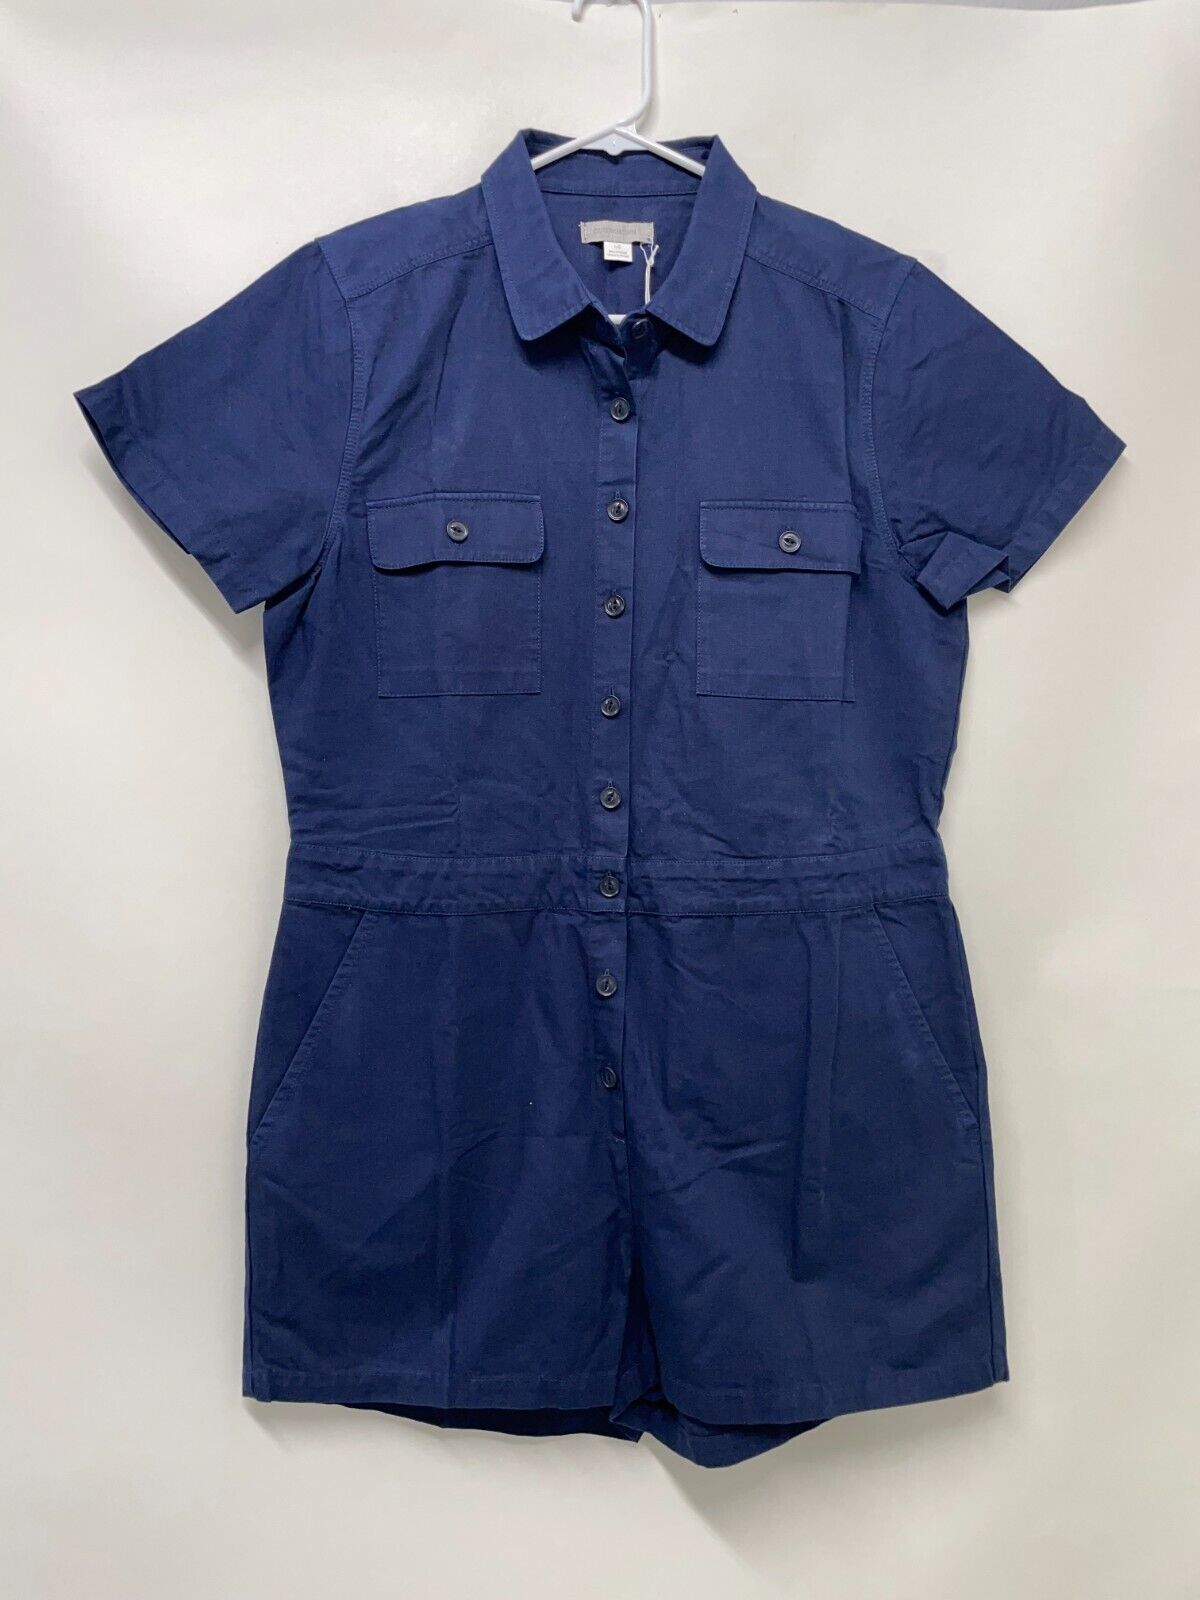 Outerknown Women's L S.E.A. Suit Shortall Navy Blue Organic Cotton Linen Romper